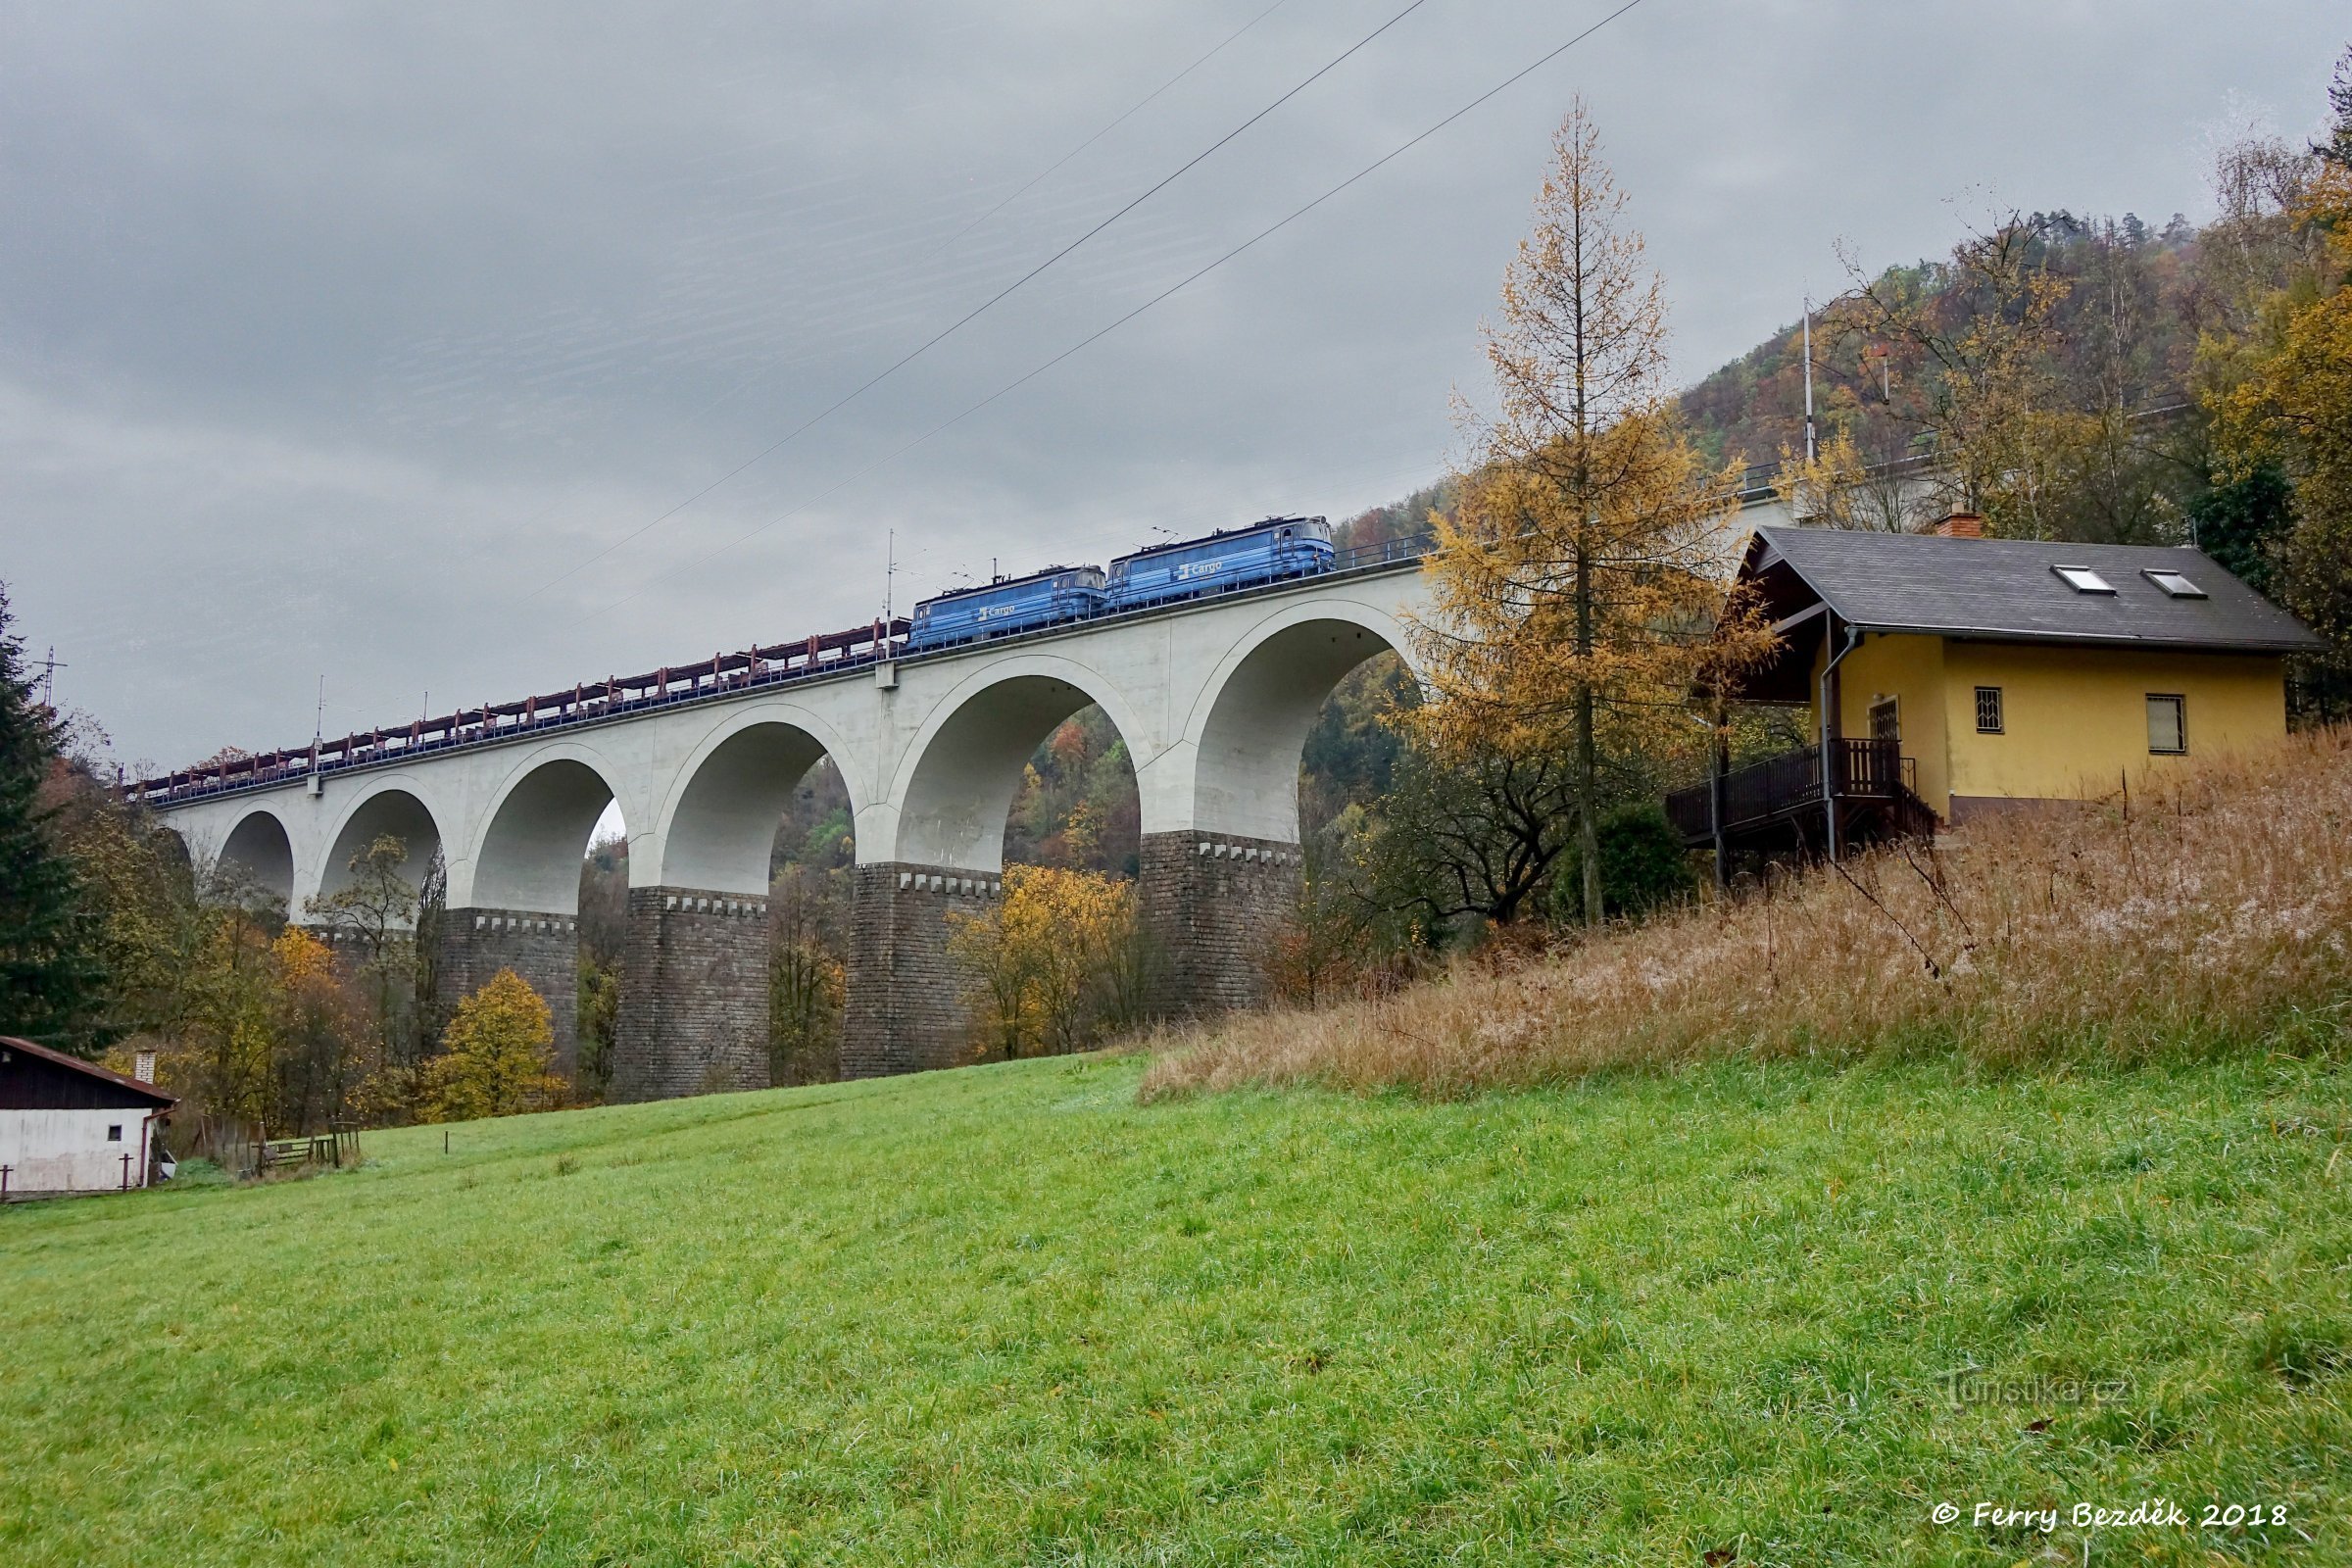 Mezihoří - railway viaduct